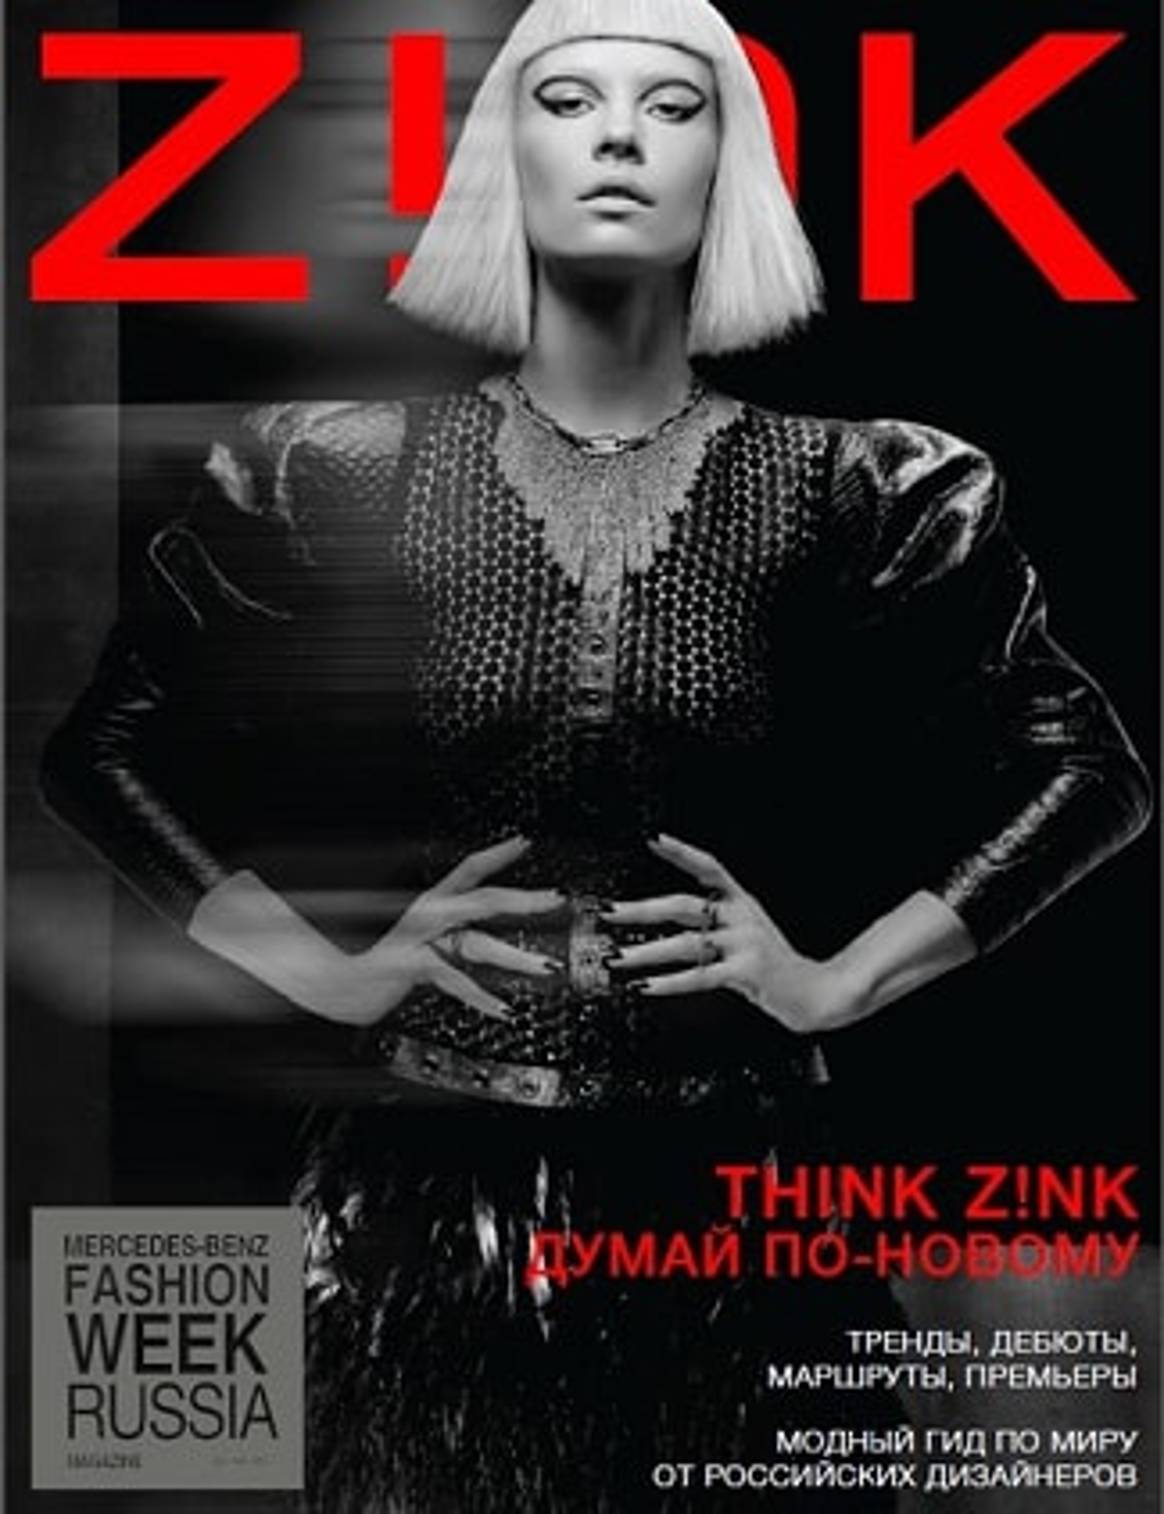 Zink для Mercedes-Benz Fashion Week Russia